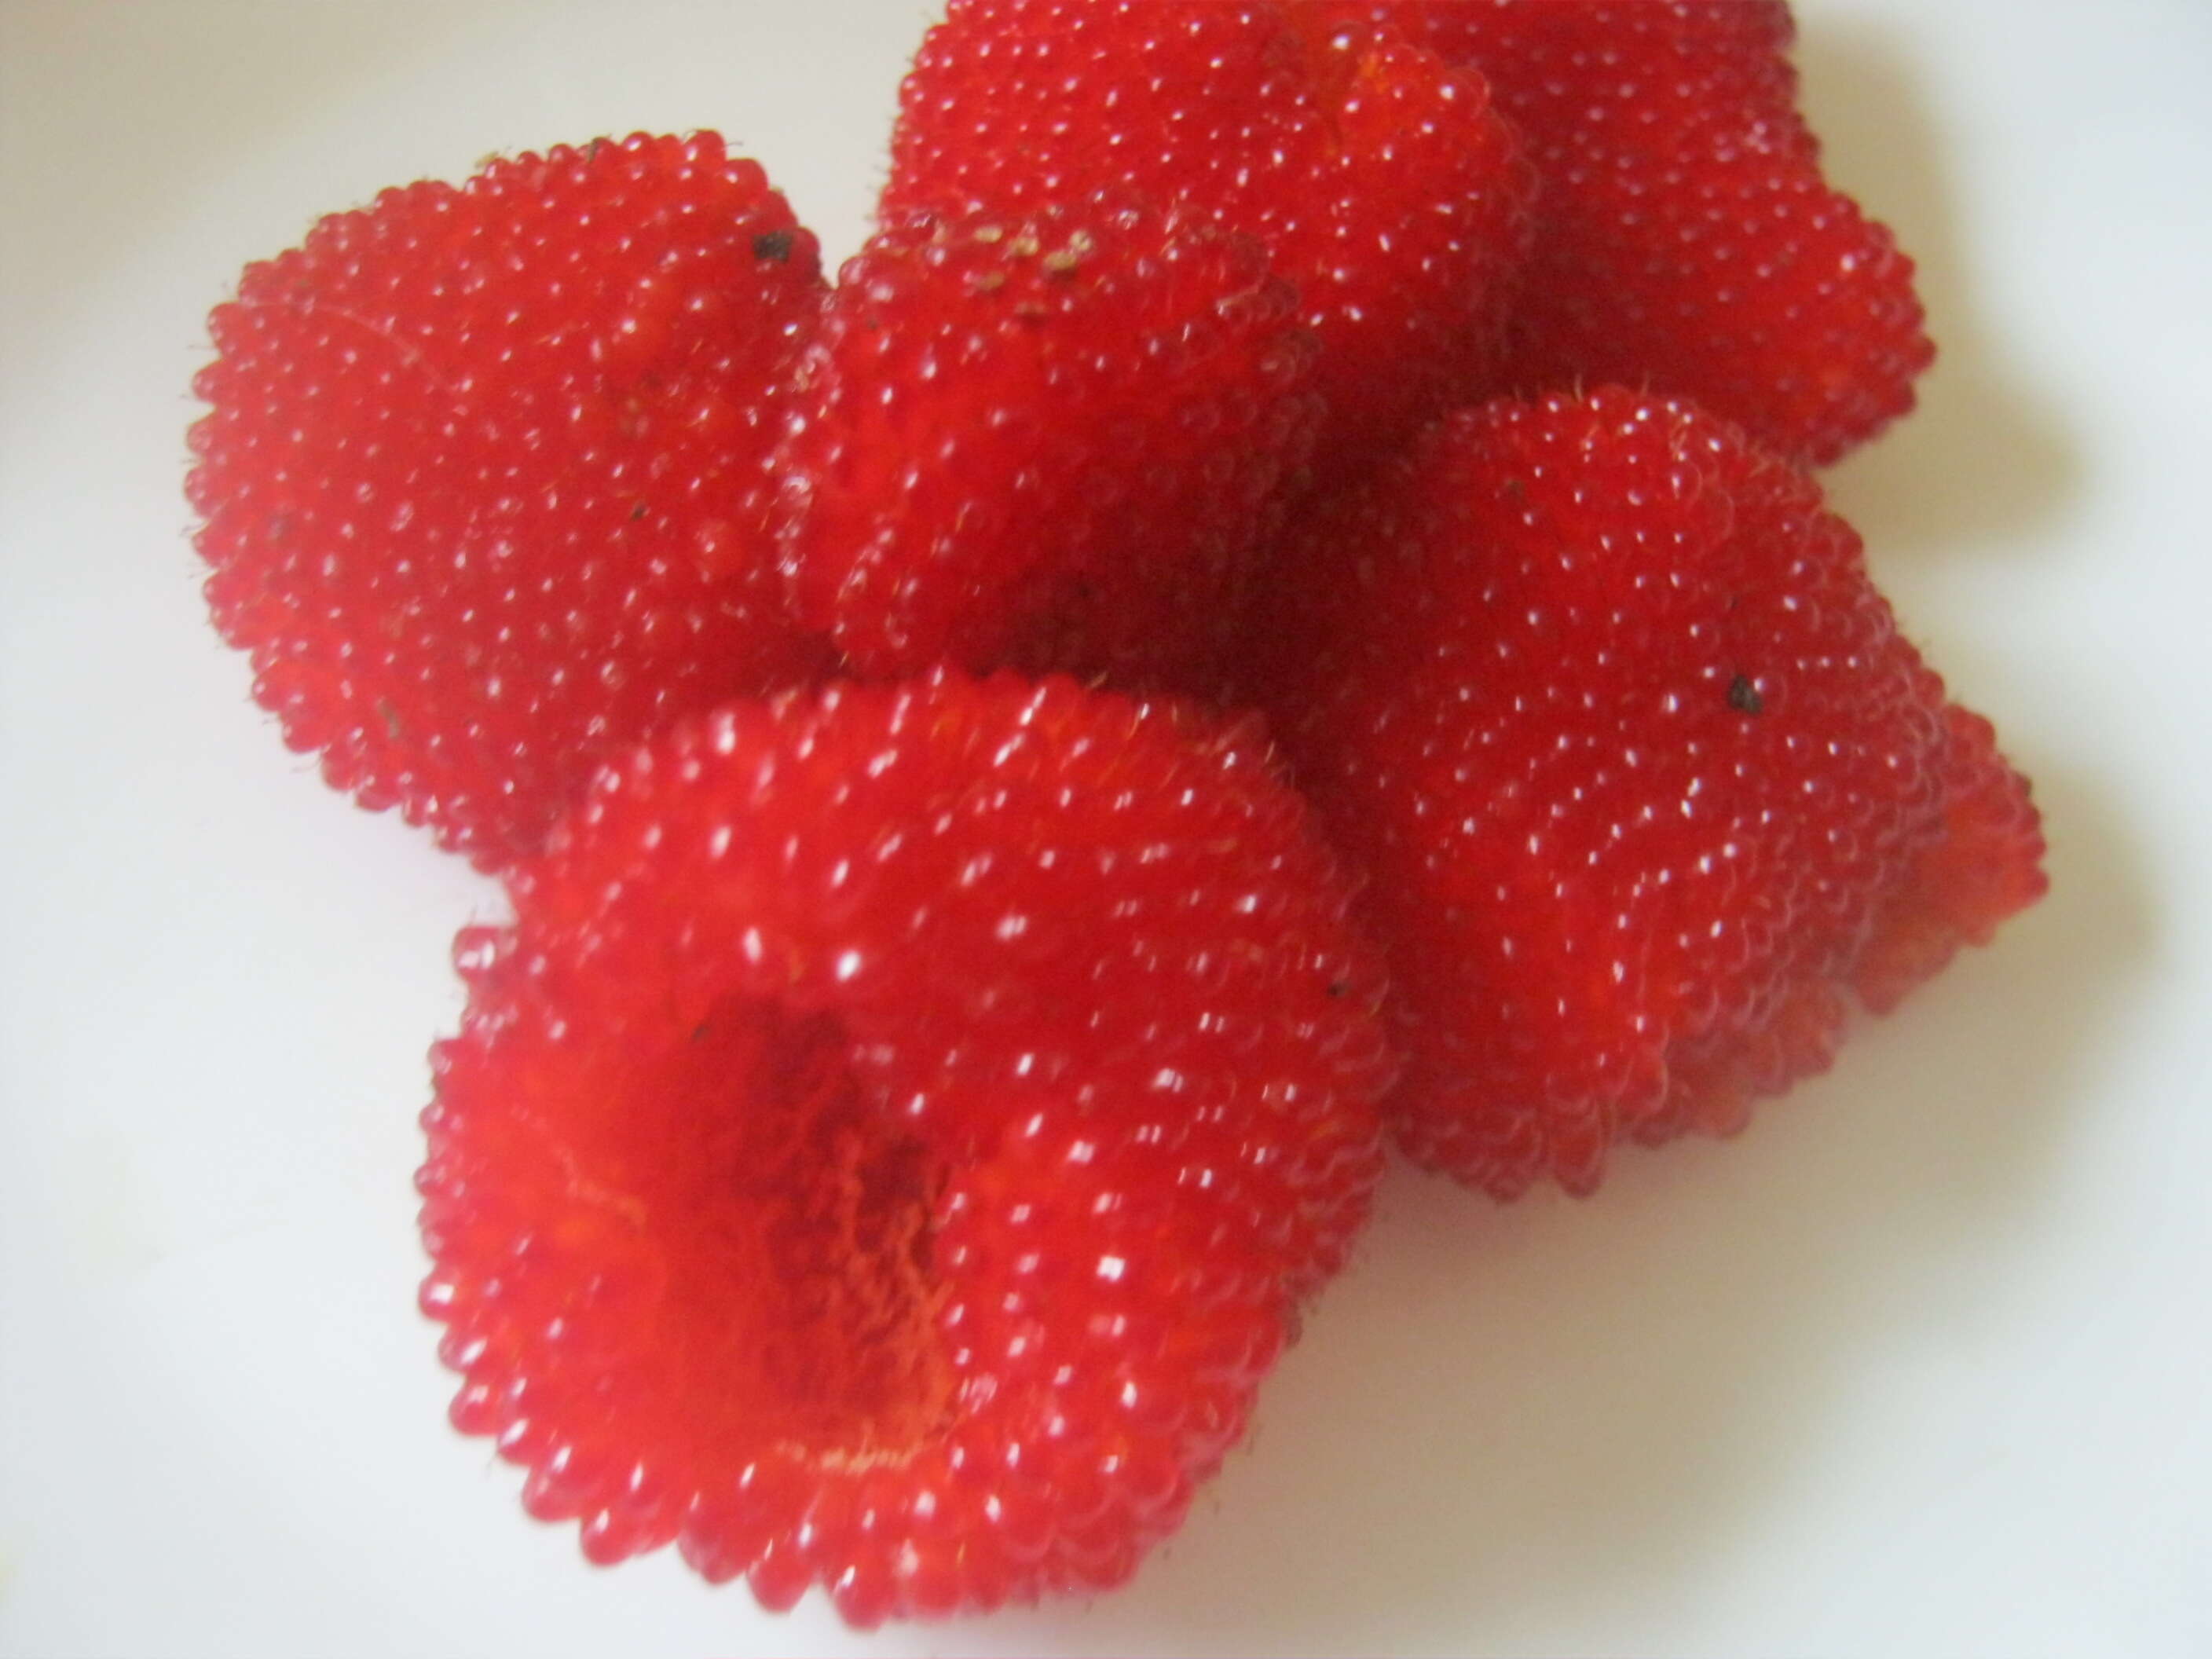 Image of strawberry raspberry